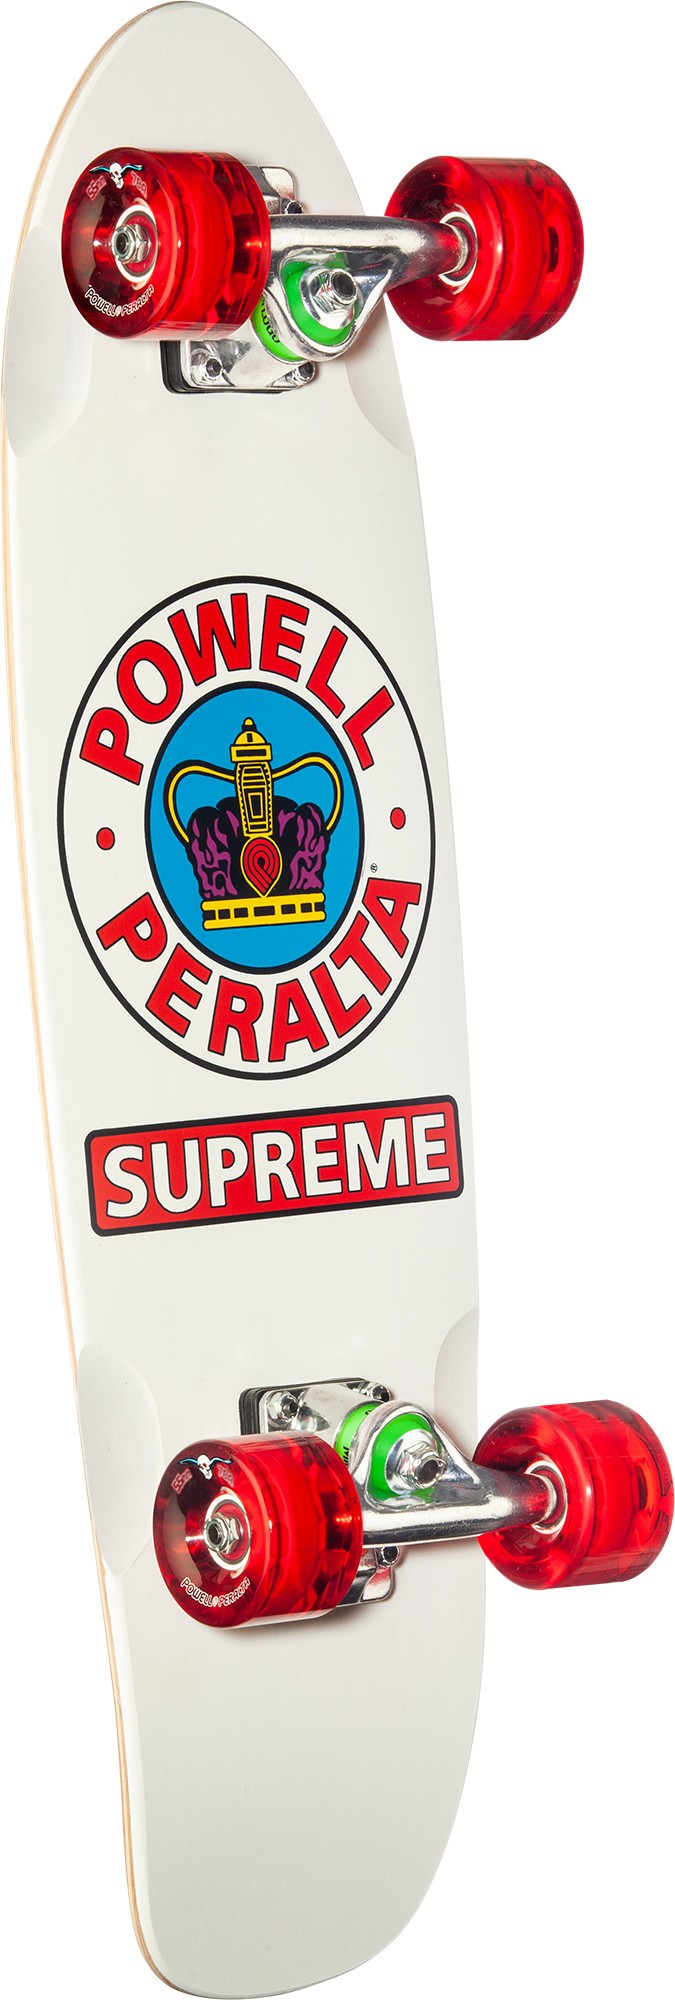 Powell Peralta 7.75 Sidewalk Surfer Supreme Cruiser 69CM